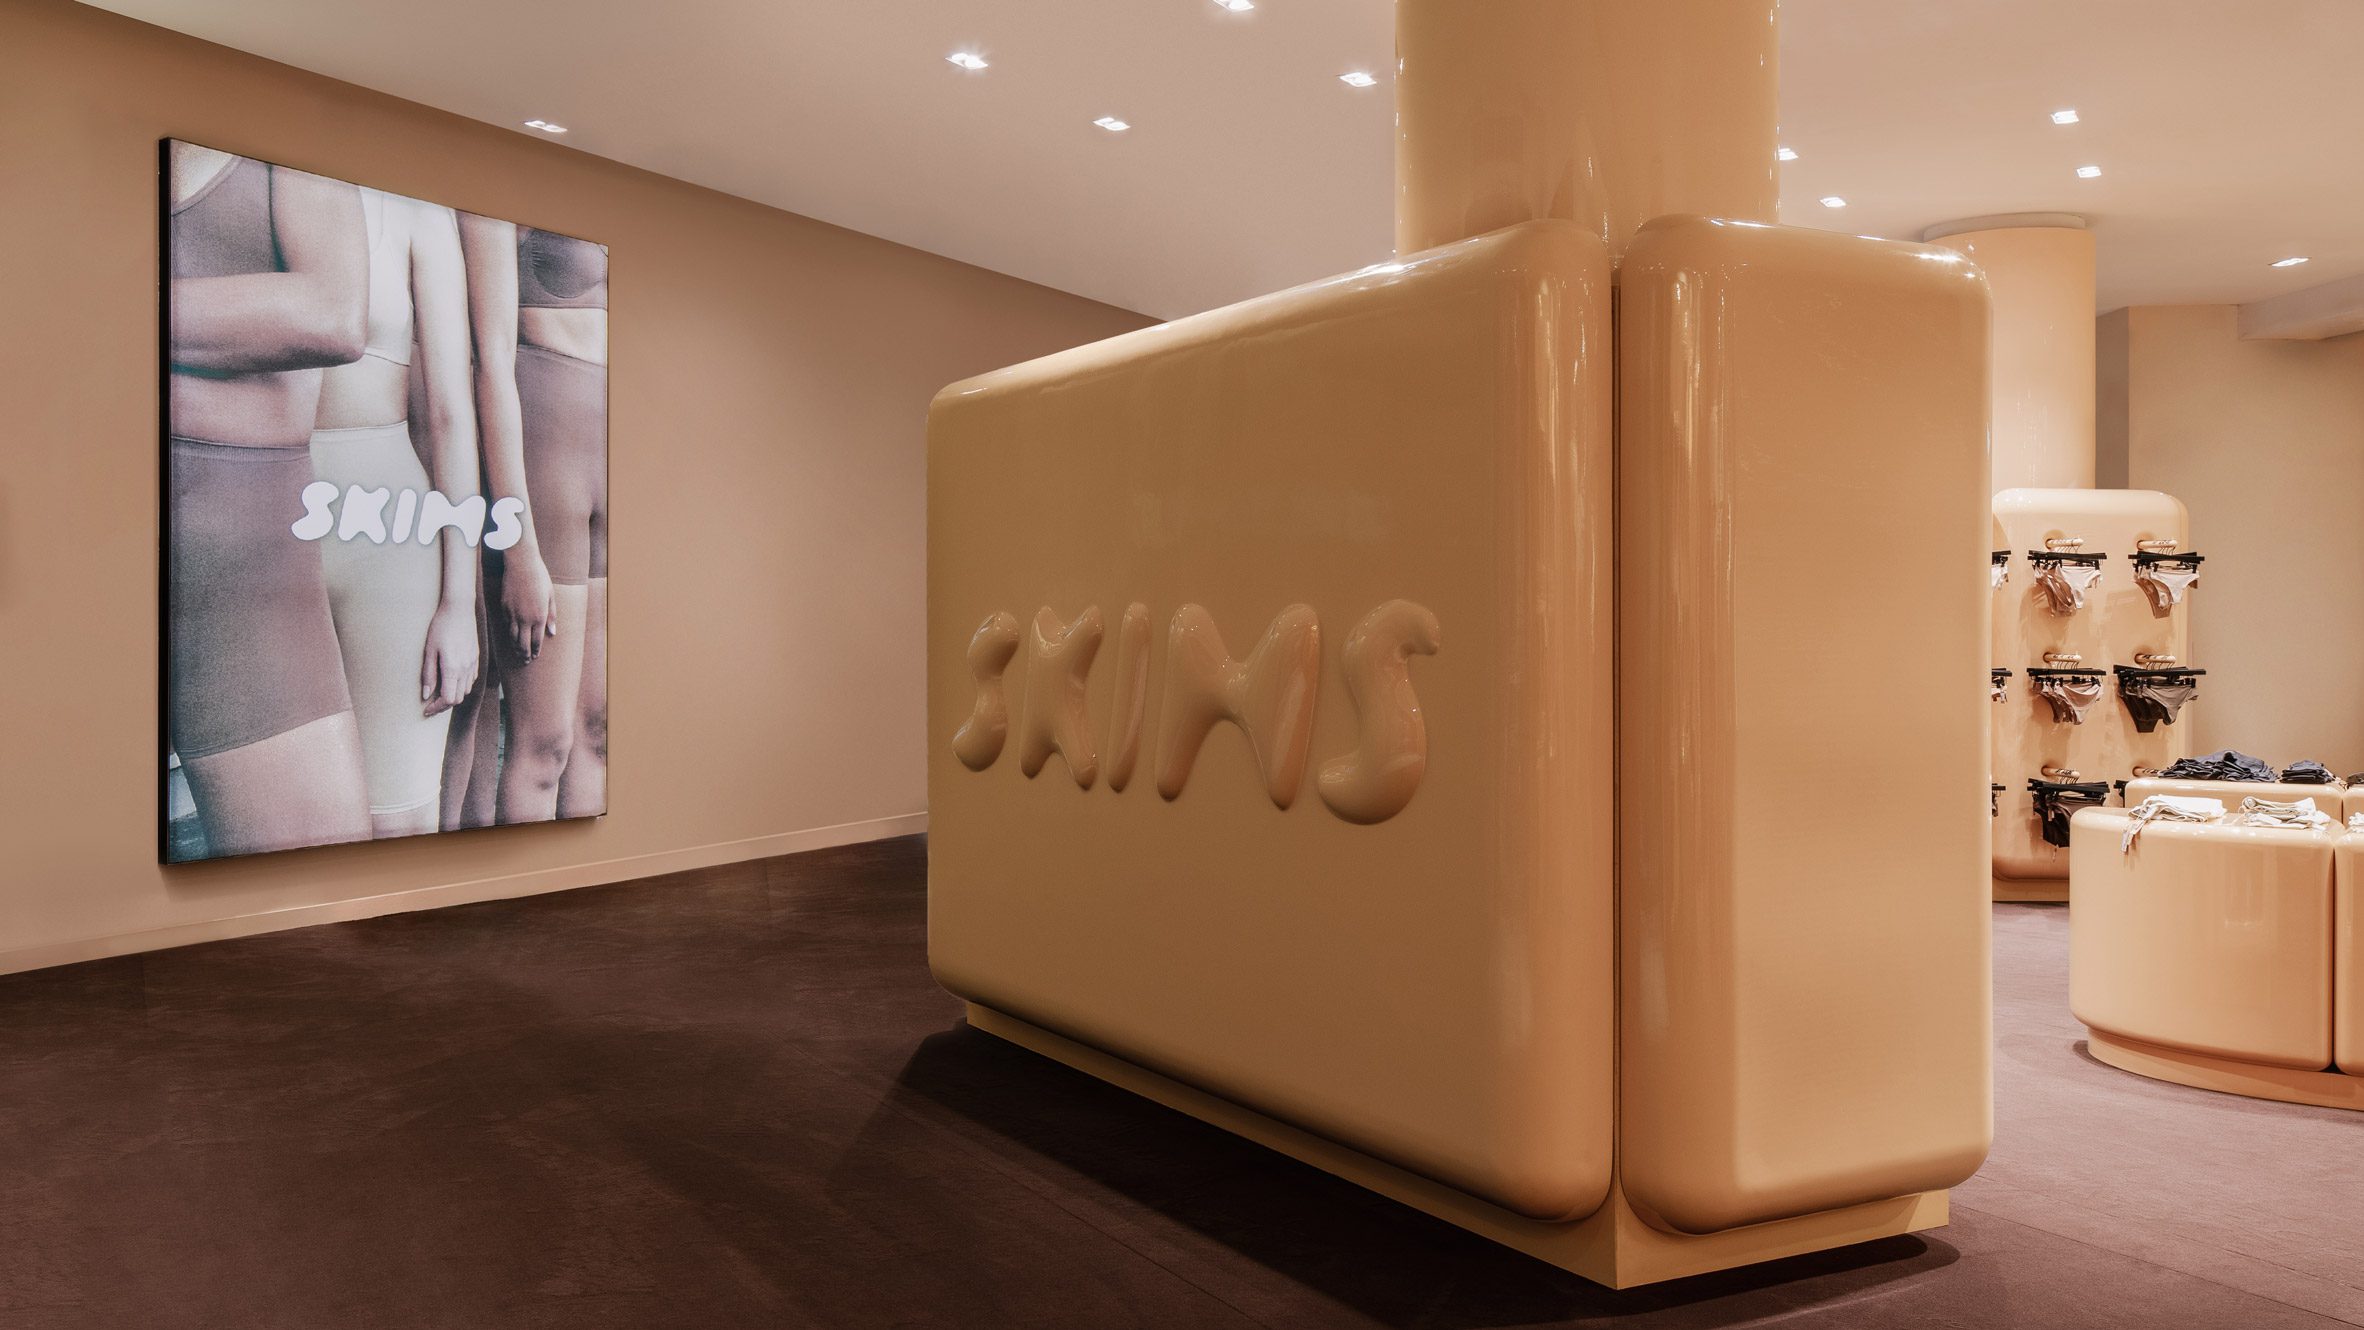 SKIMS underwear store in Paris, France designed by Willo Perron